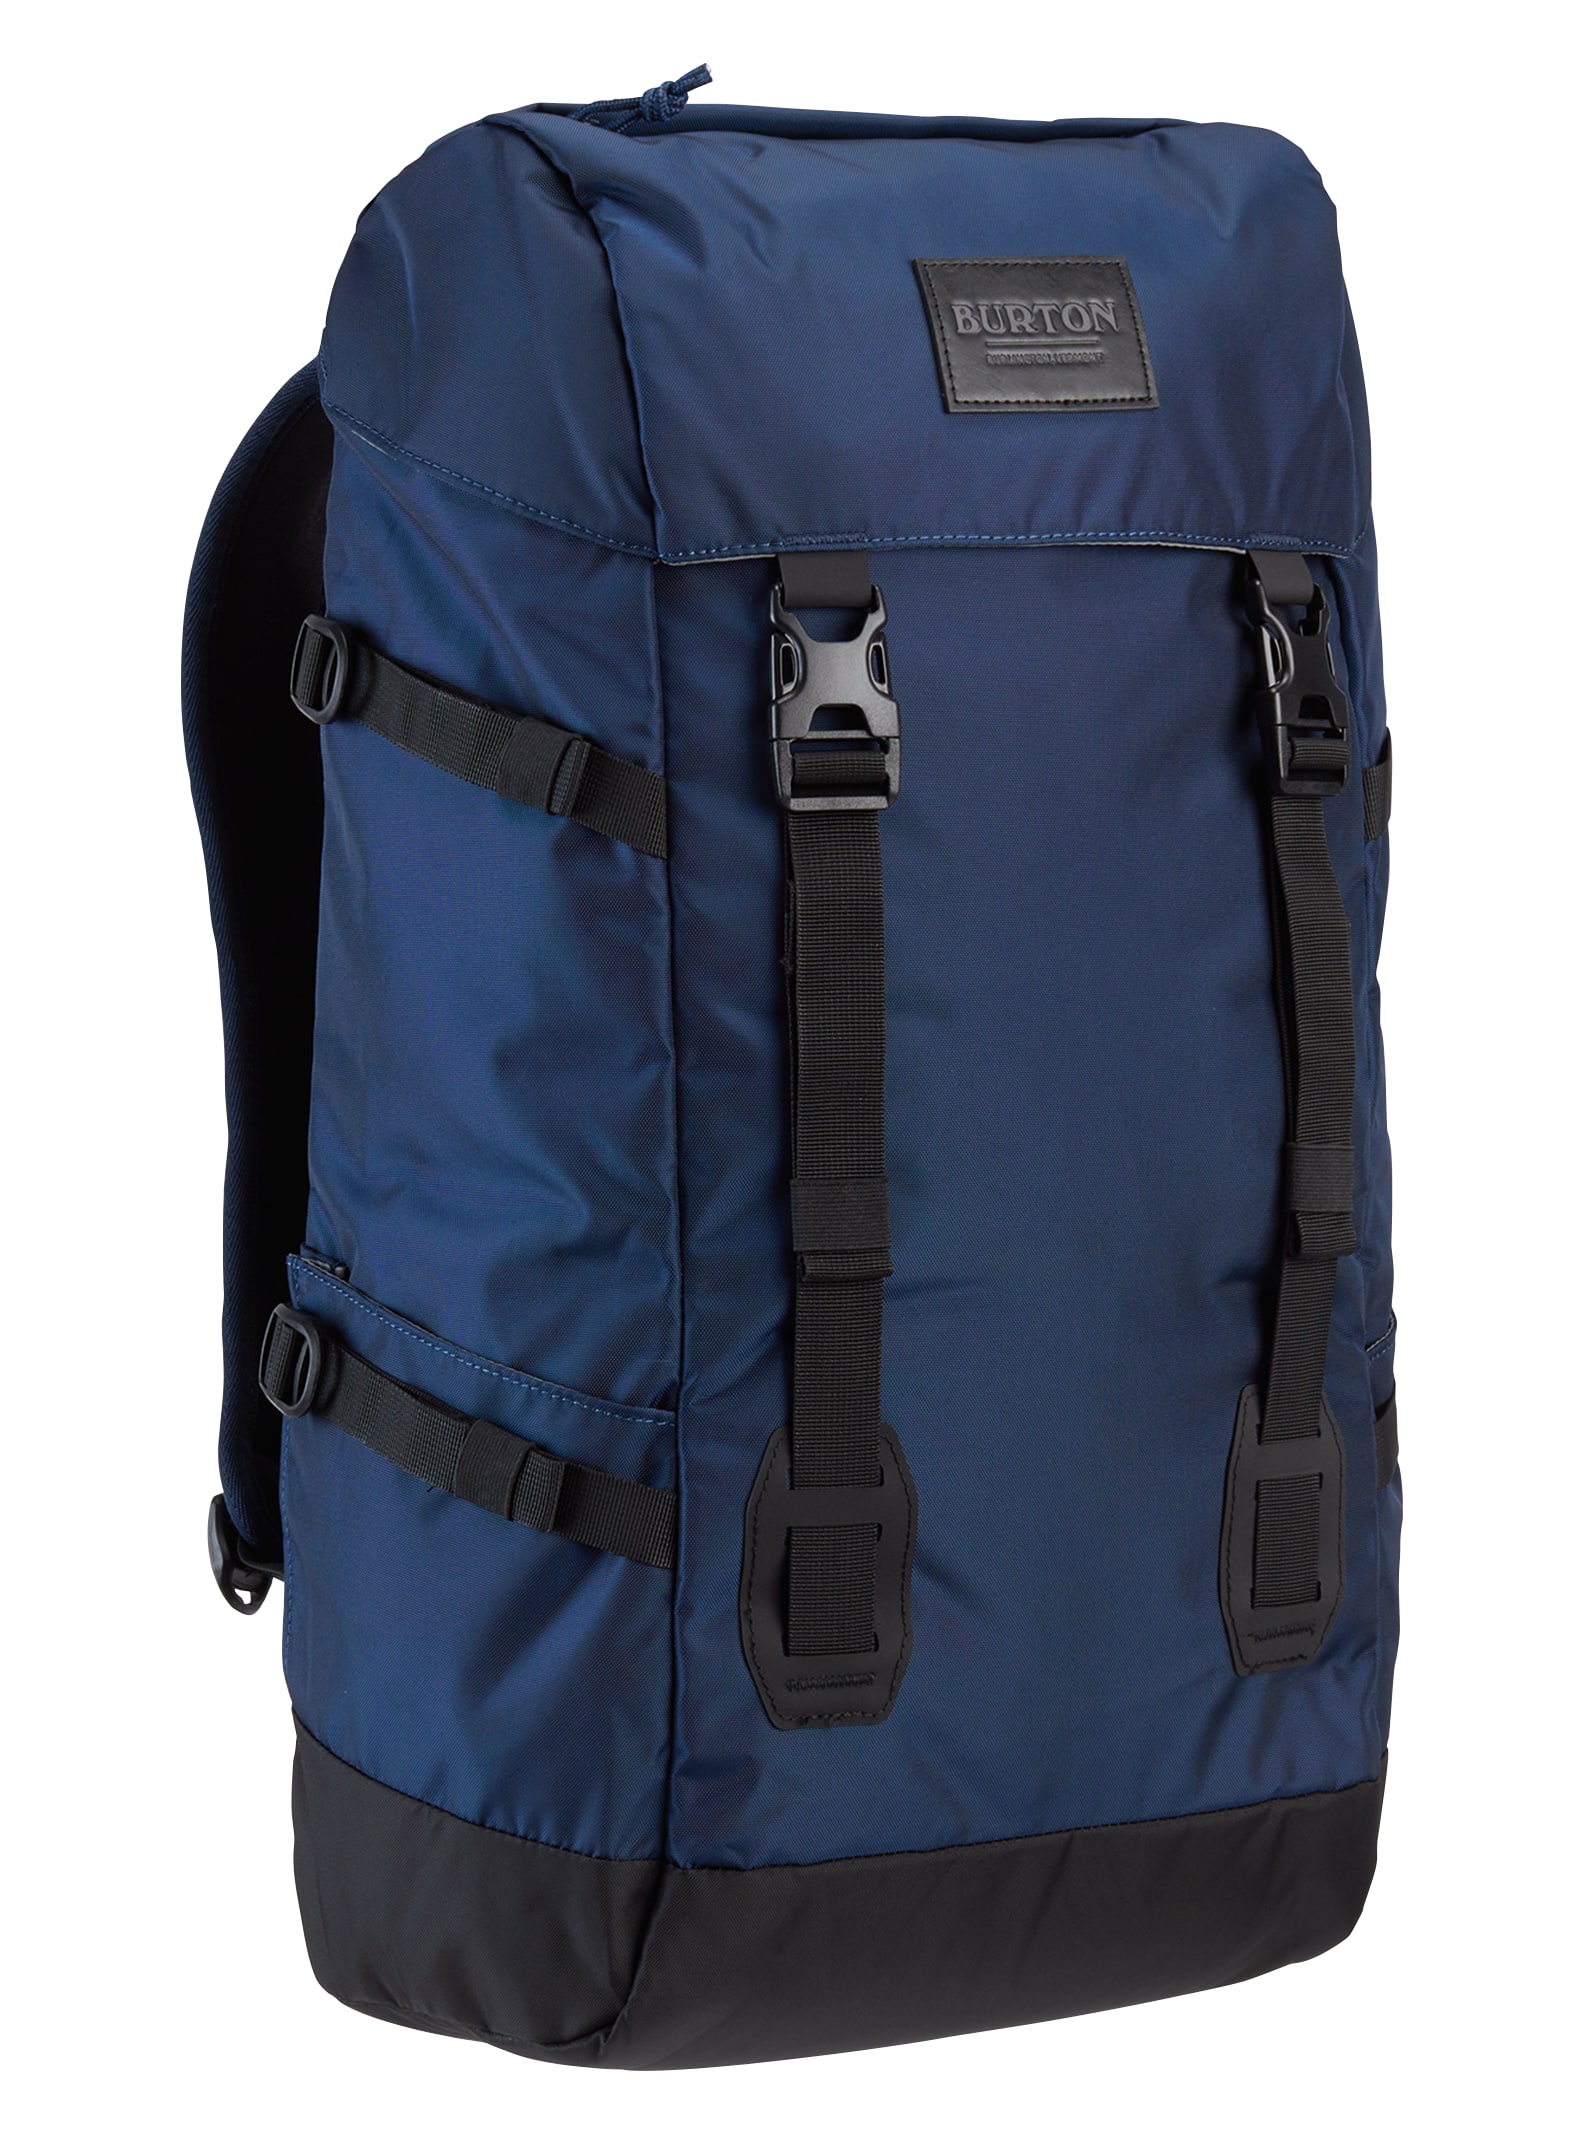 Burton Tinder 2.0 30L Backpack | Burton.com Spring 2022 US